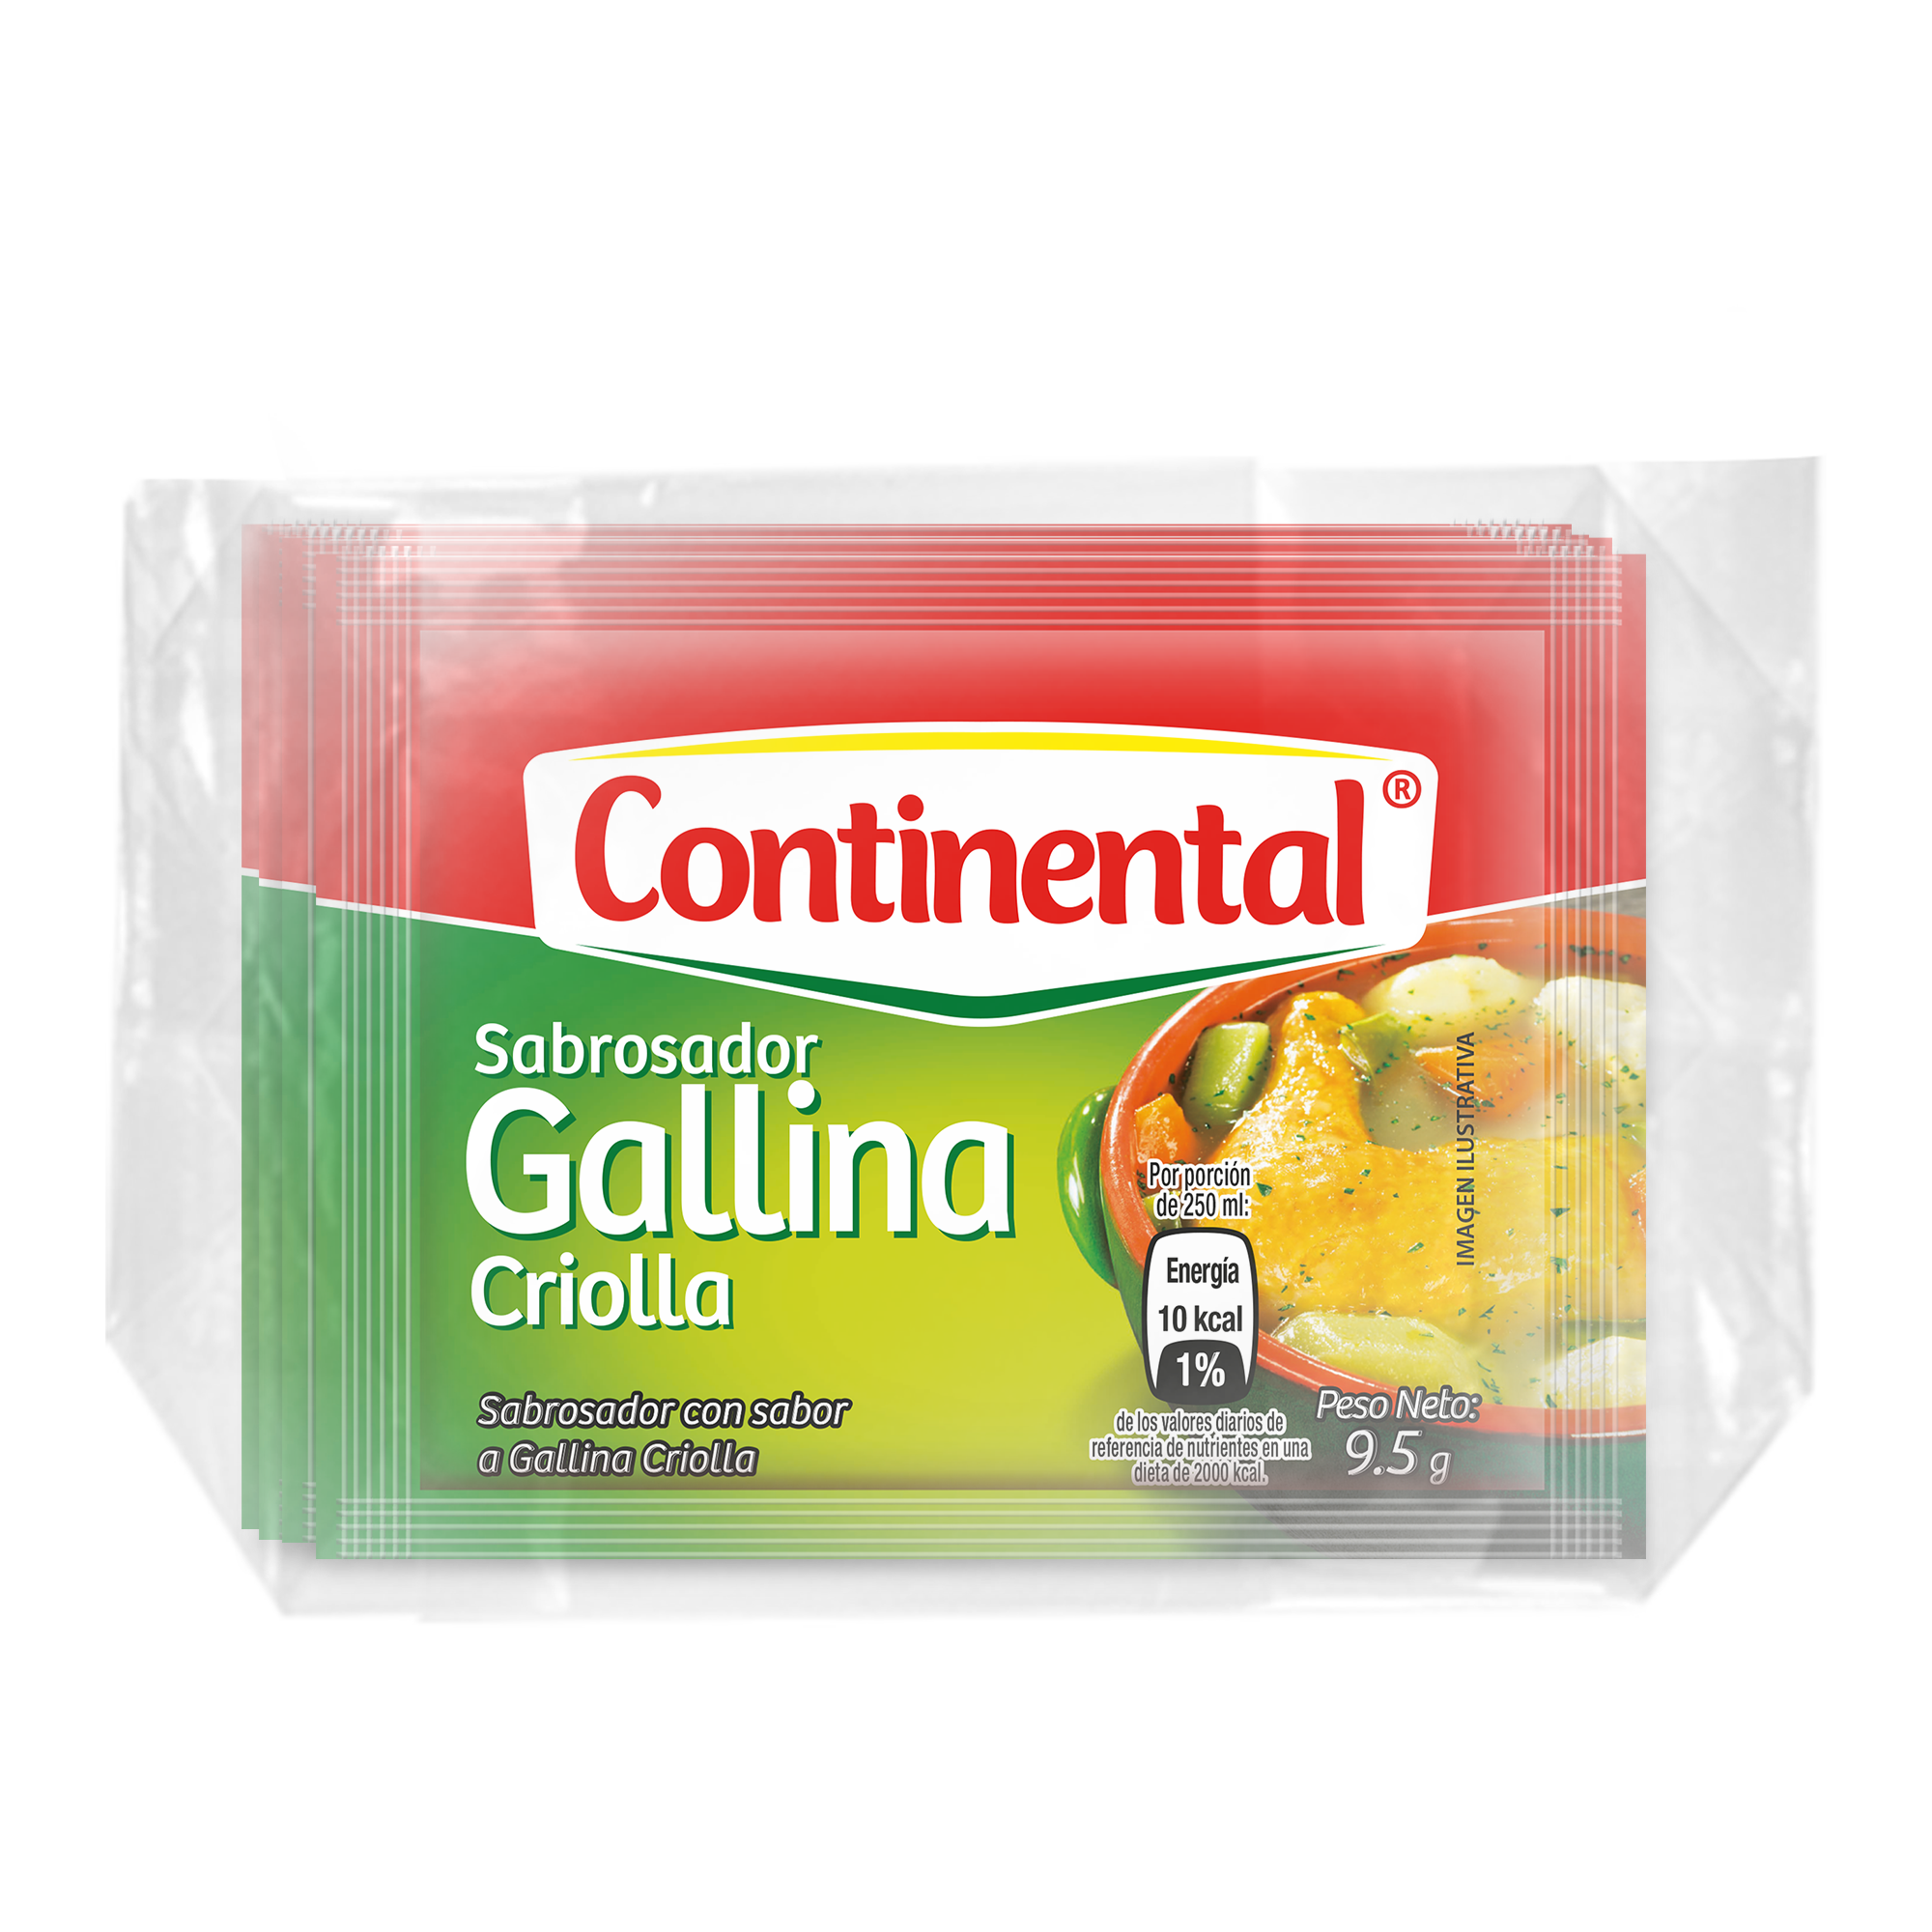 Sabrosador Gallina 4 Pack